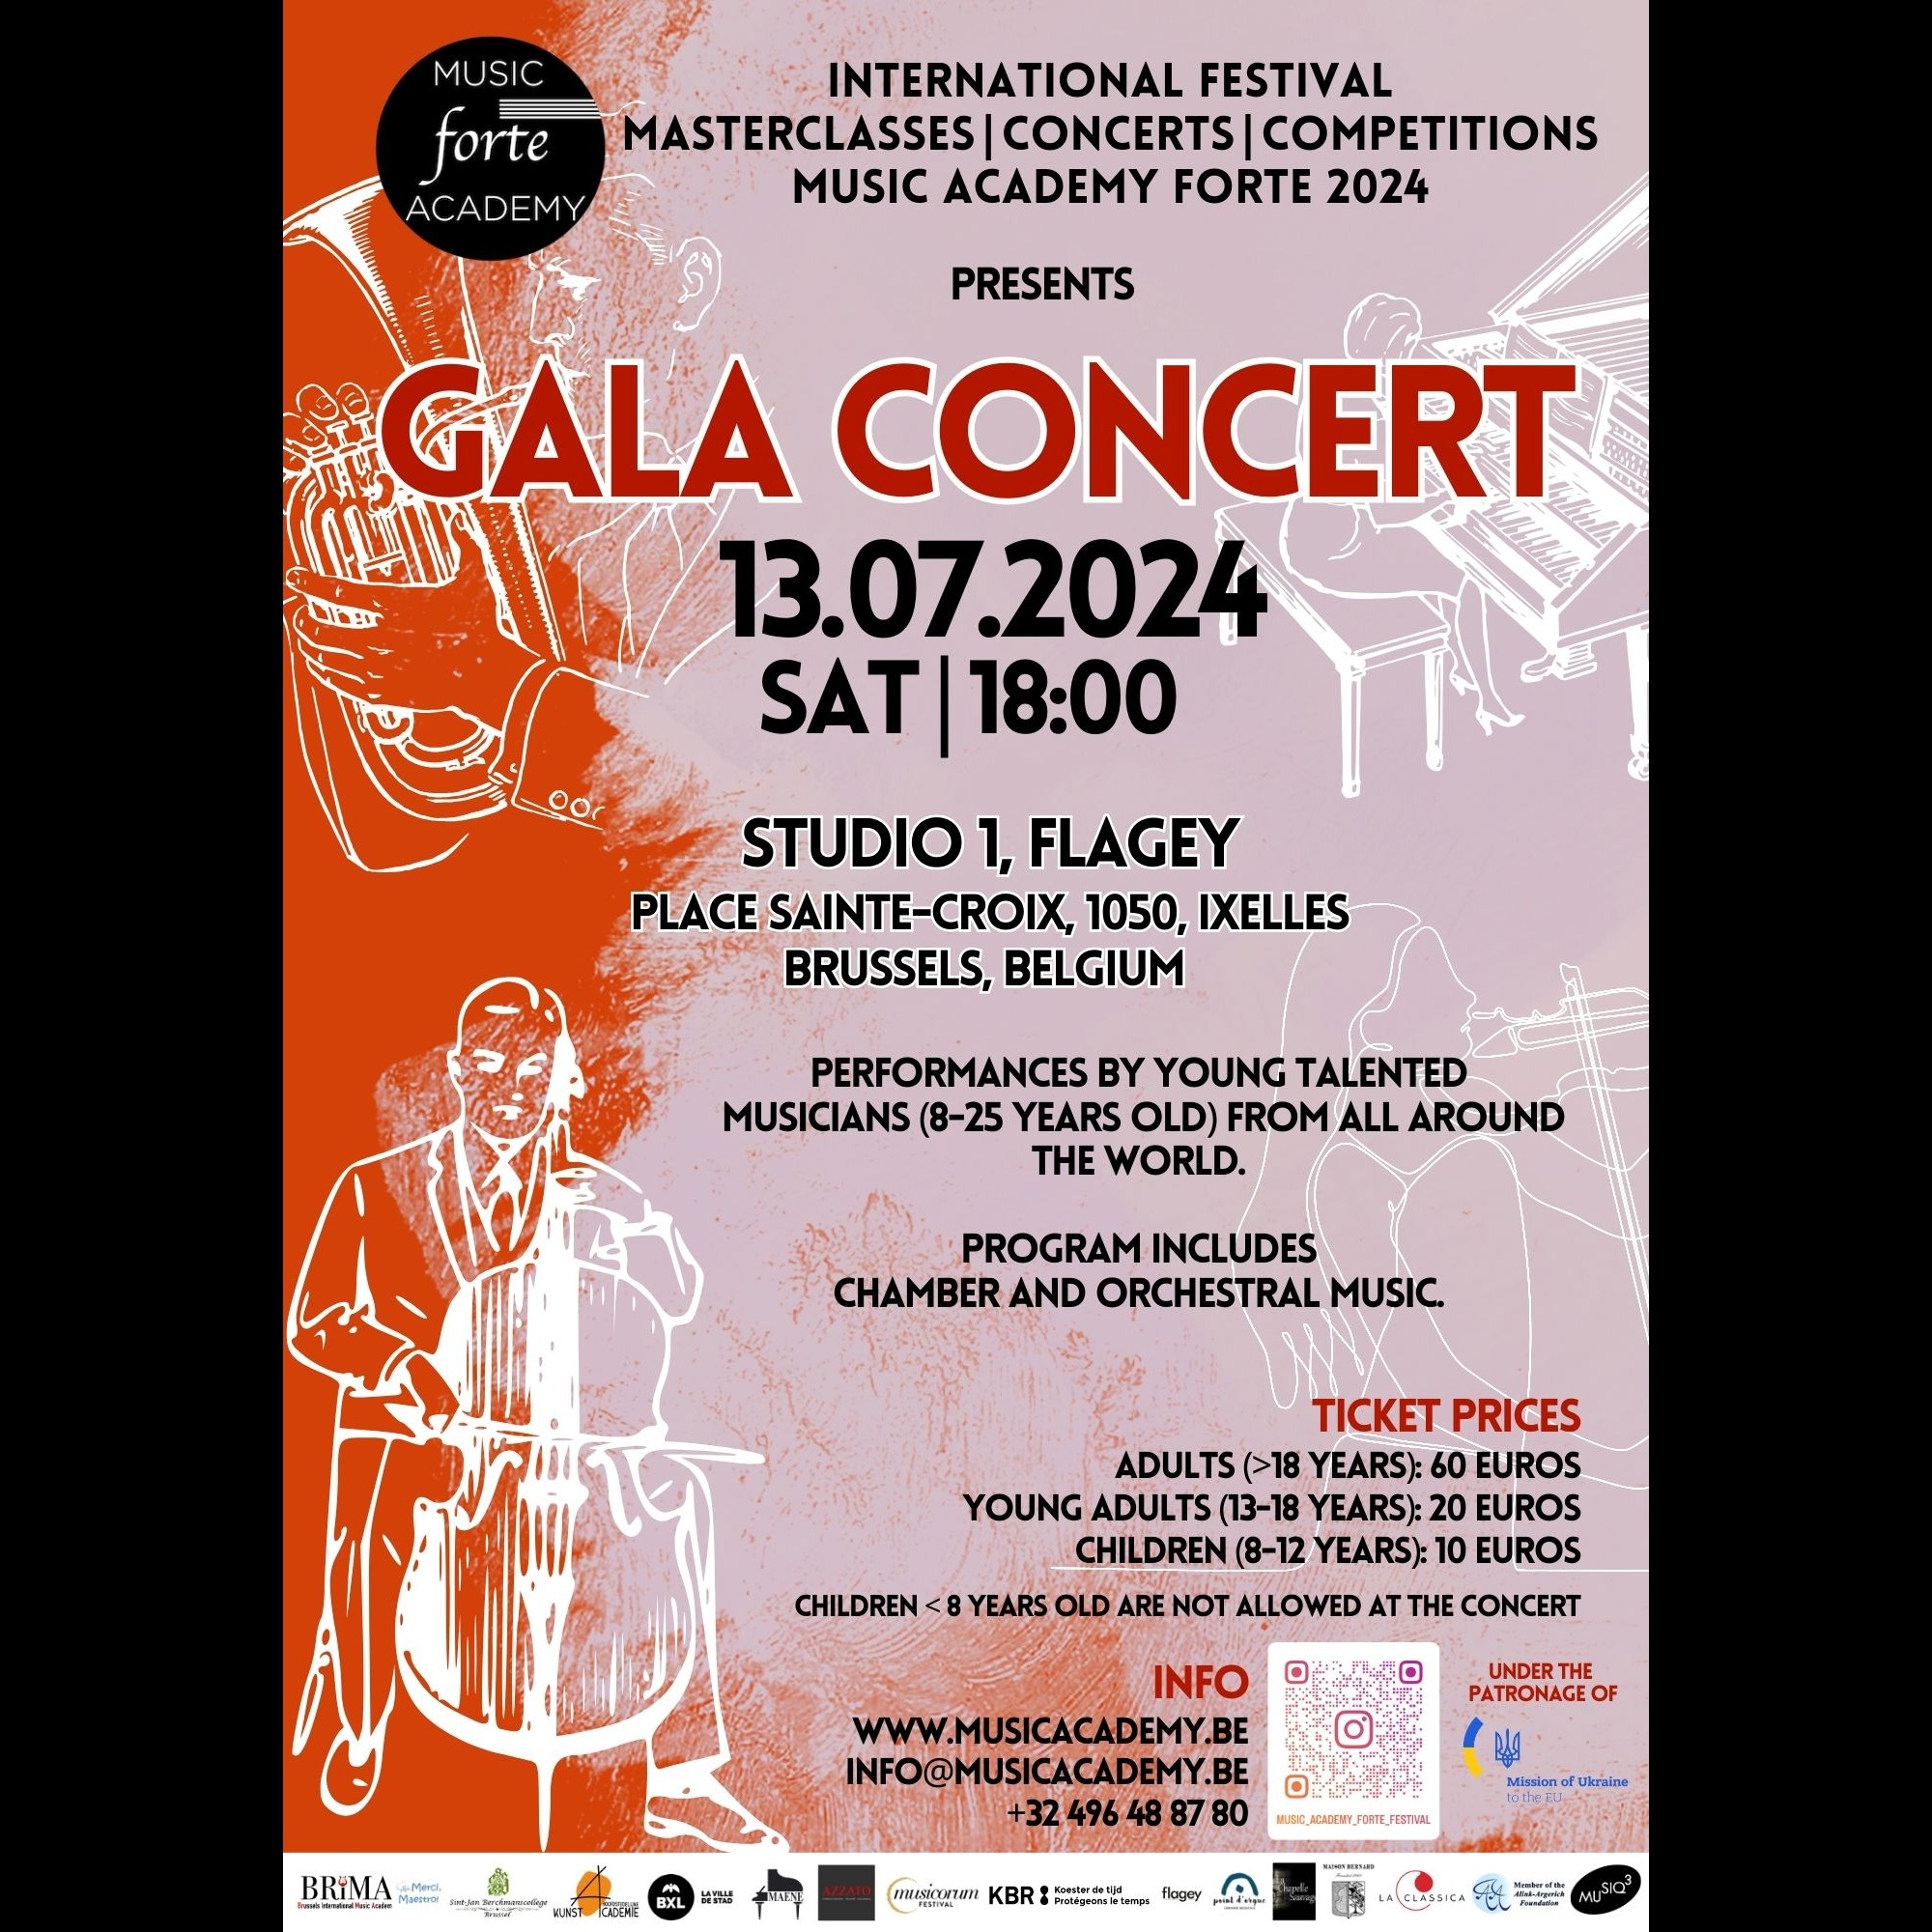 GALA Concert 2024